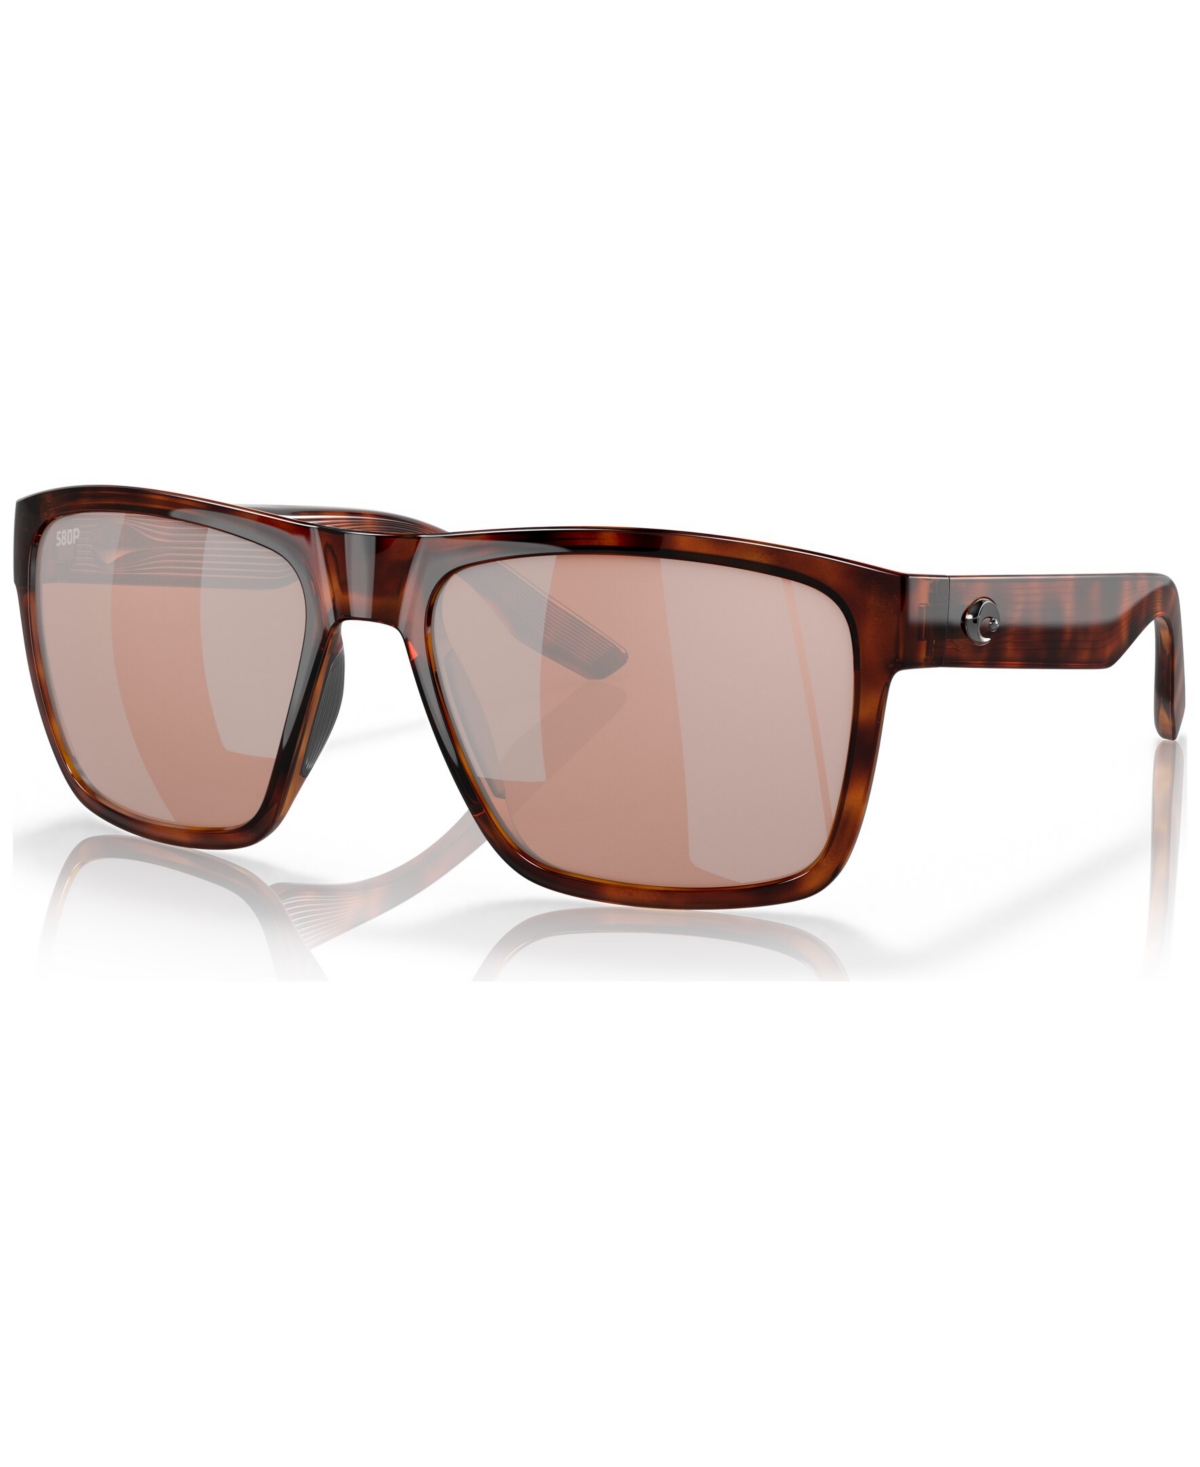 Men's Polarized Sunglasses, 6S905059-zp - Tortoise